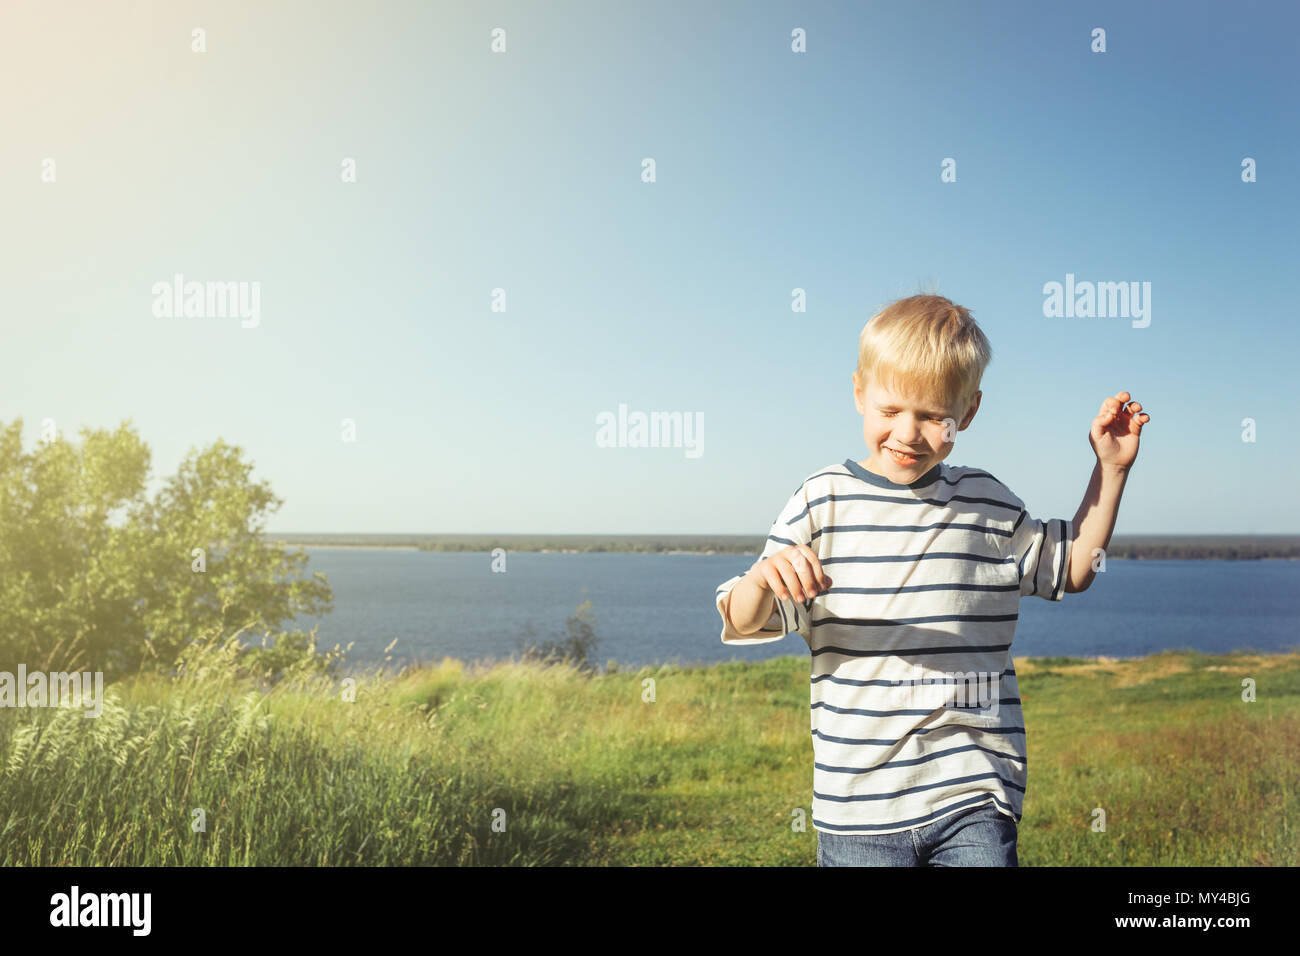 Blond boy joyful and smiling on nature. Summer activity. Stock Photo